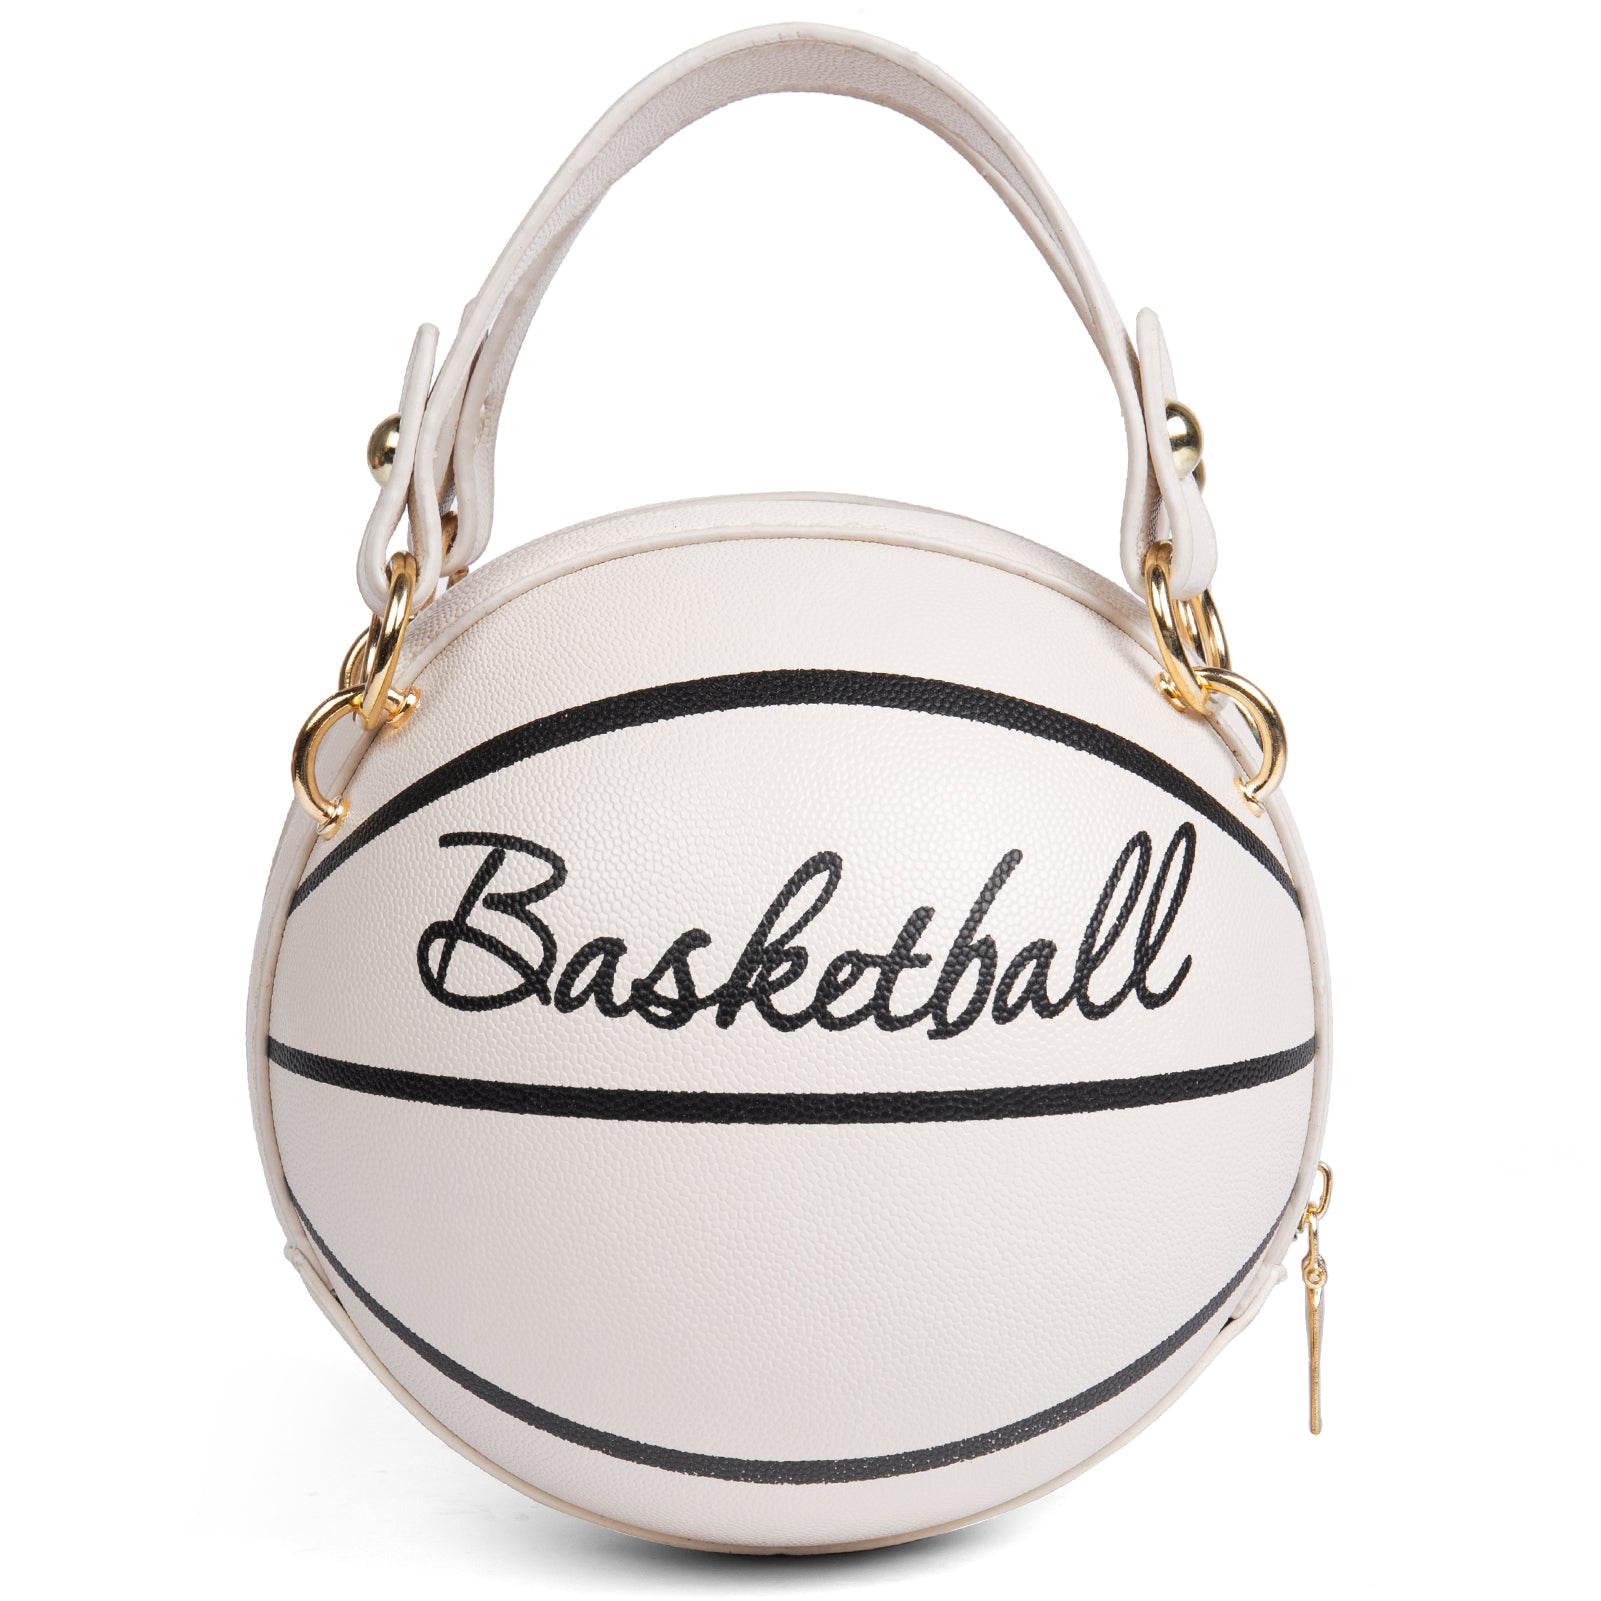 Basketball Shaped Crossbody Bag, Trendy Y2K Chain Shoulder Bag, PU Leather Top Handle Circle Purse